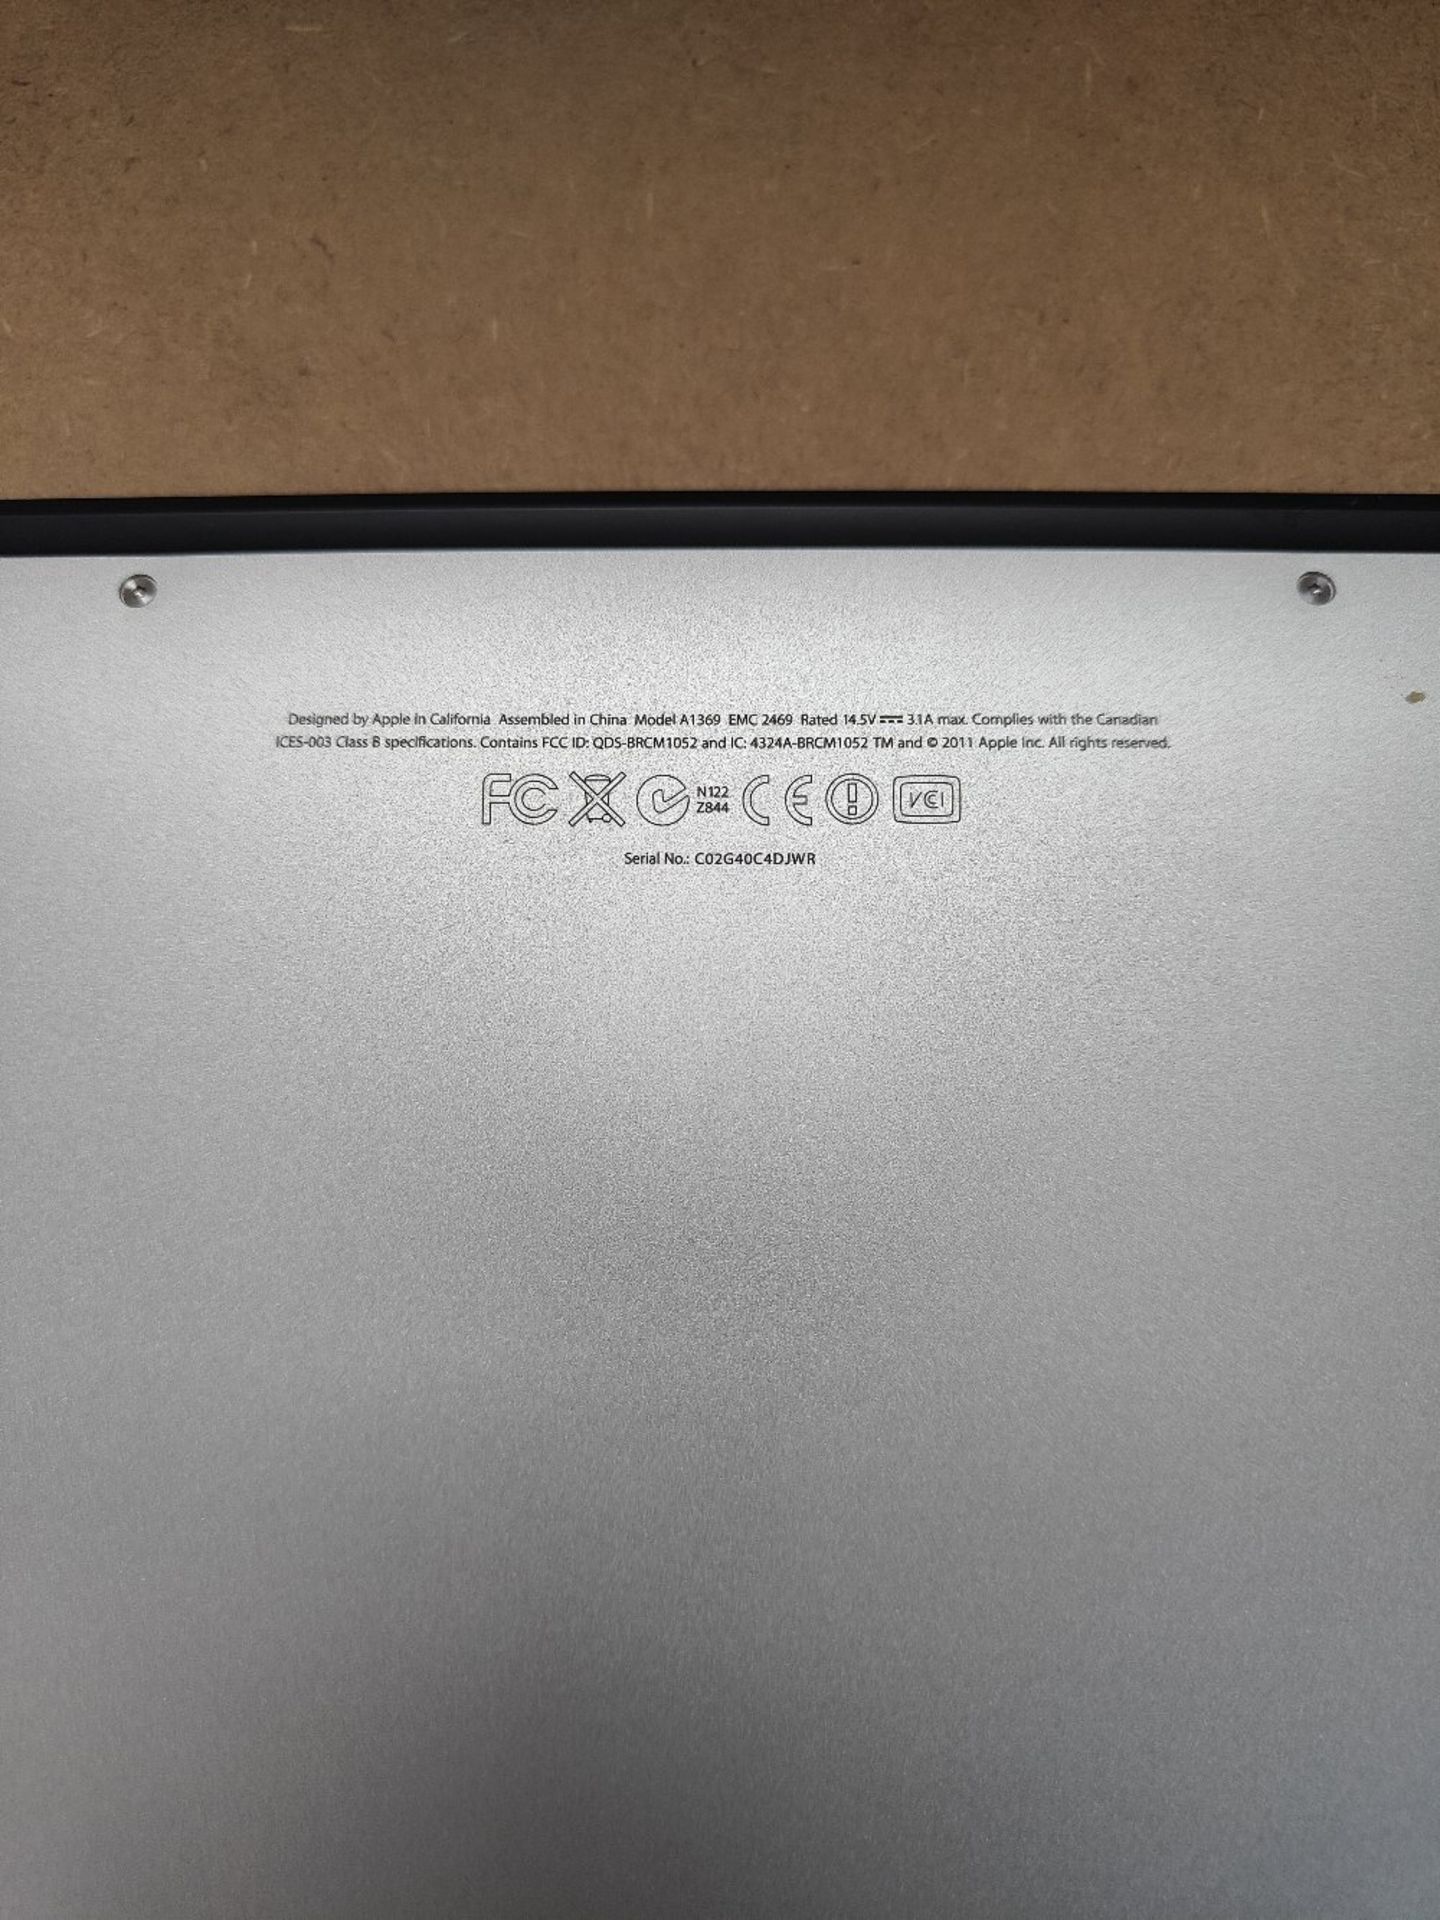 Apple Macbook Air - 13" (2011) - Intel i7 - Image 4 of 4